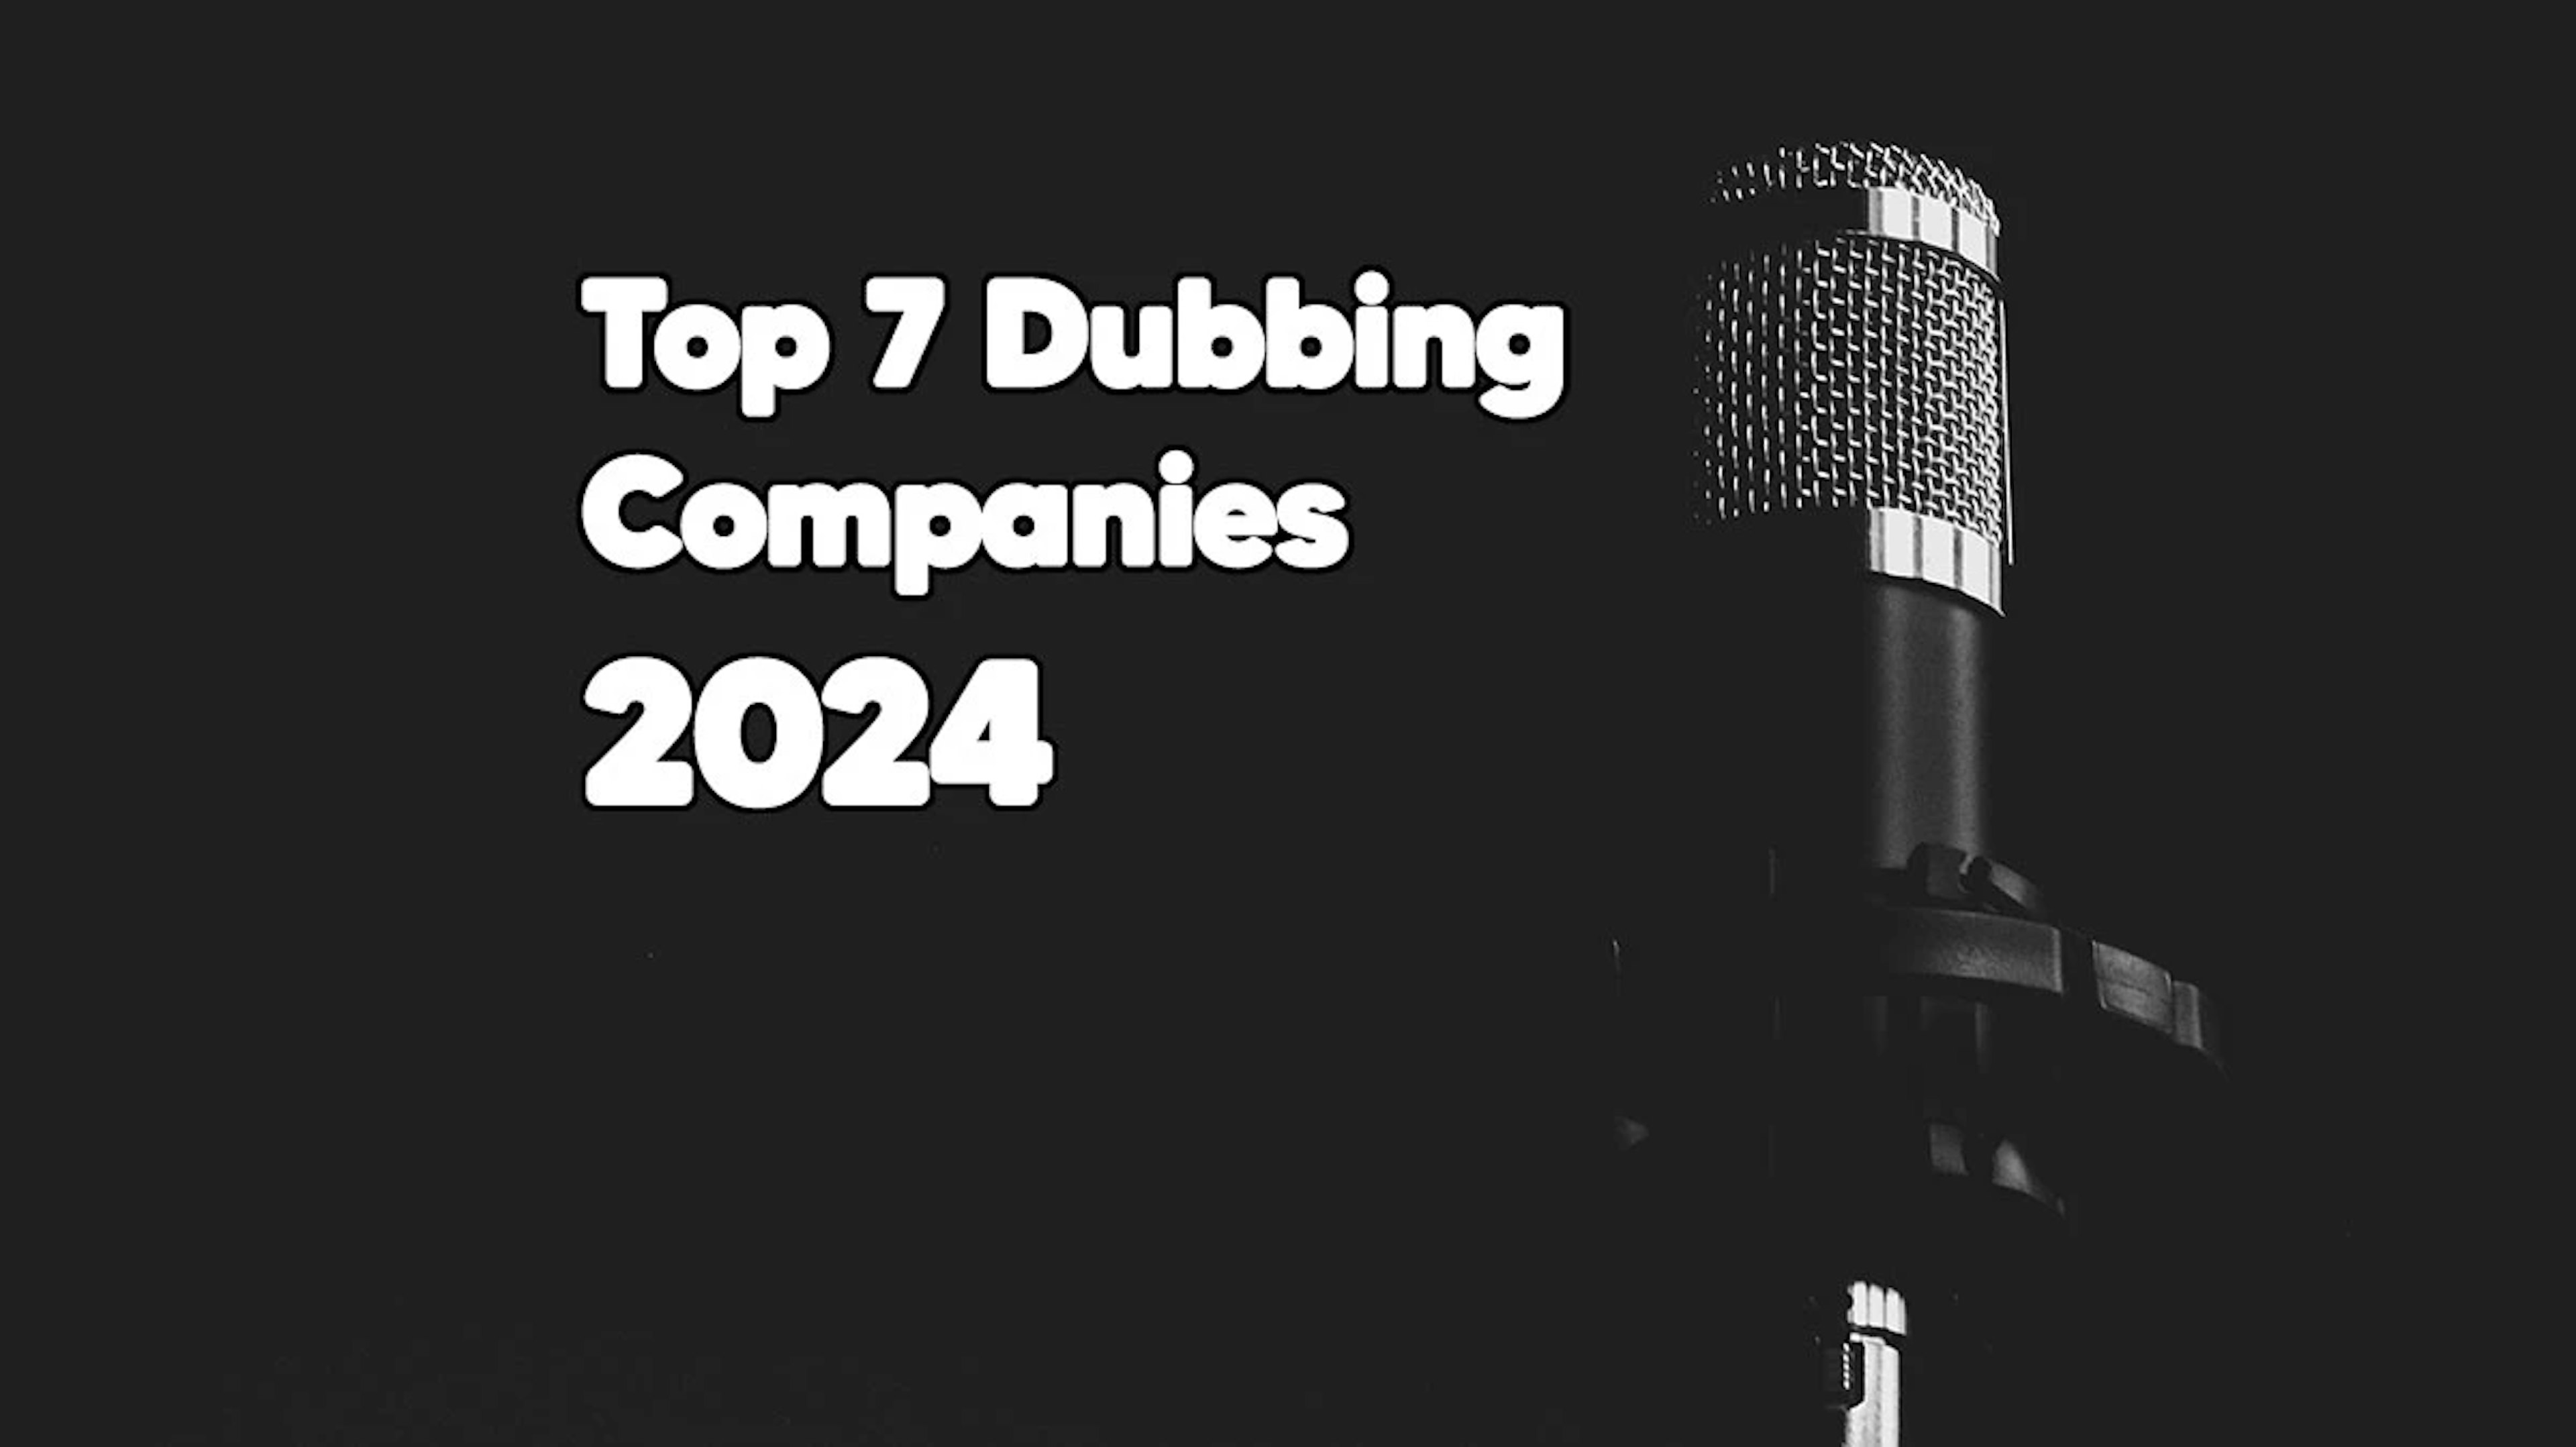 Dubbing Company - Top 7 Best Dubbing Companies of 2024